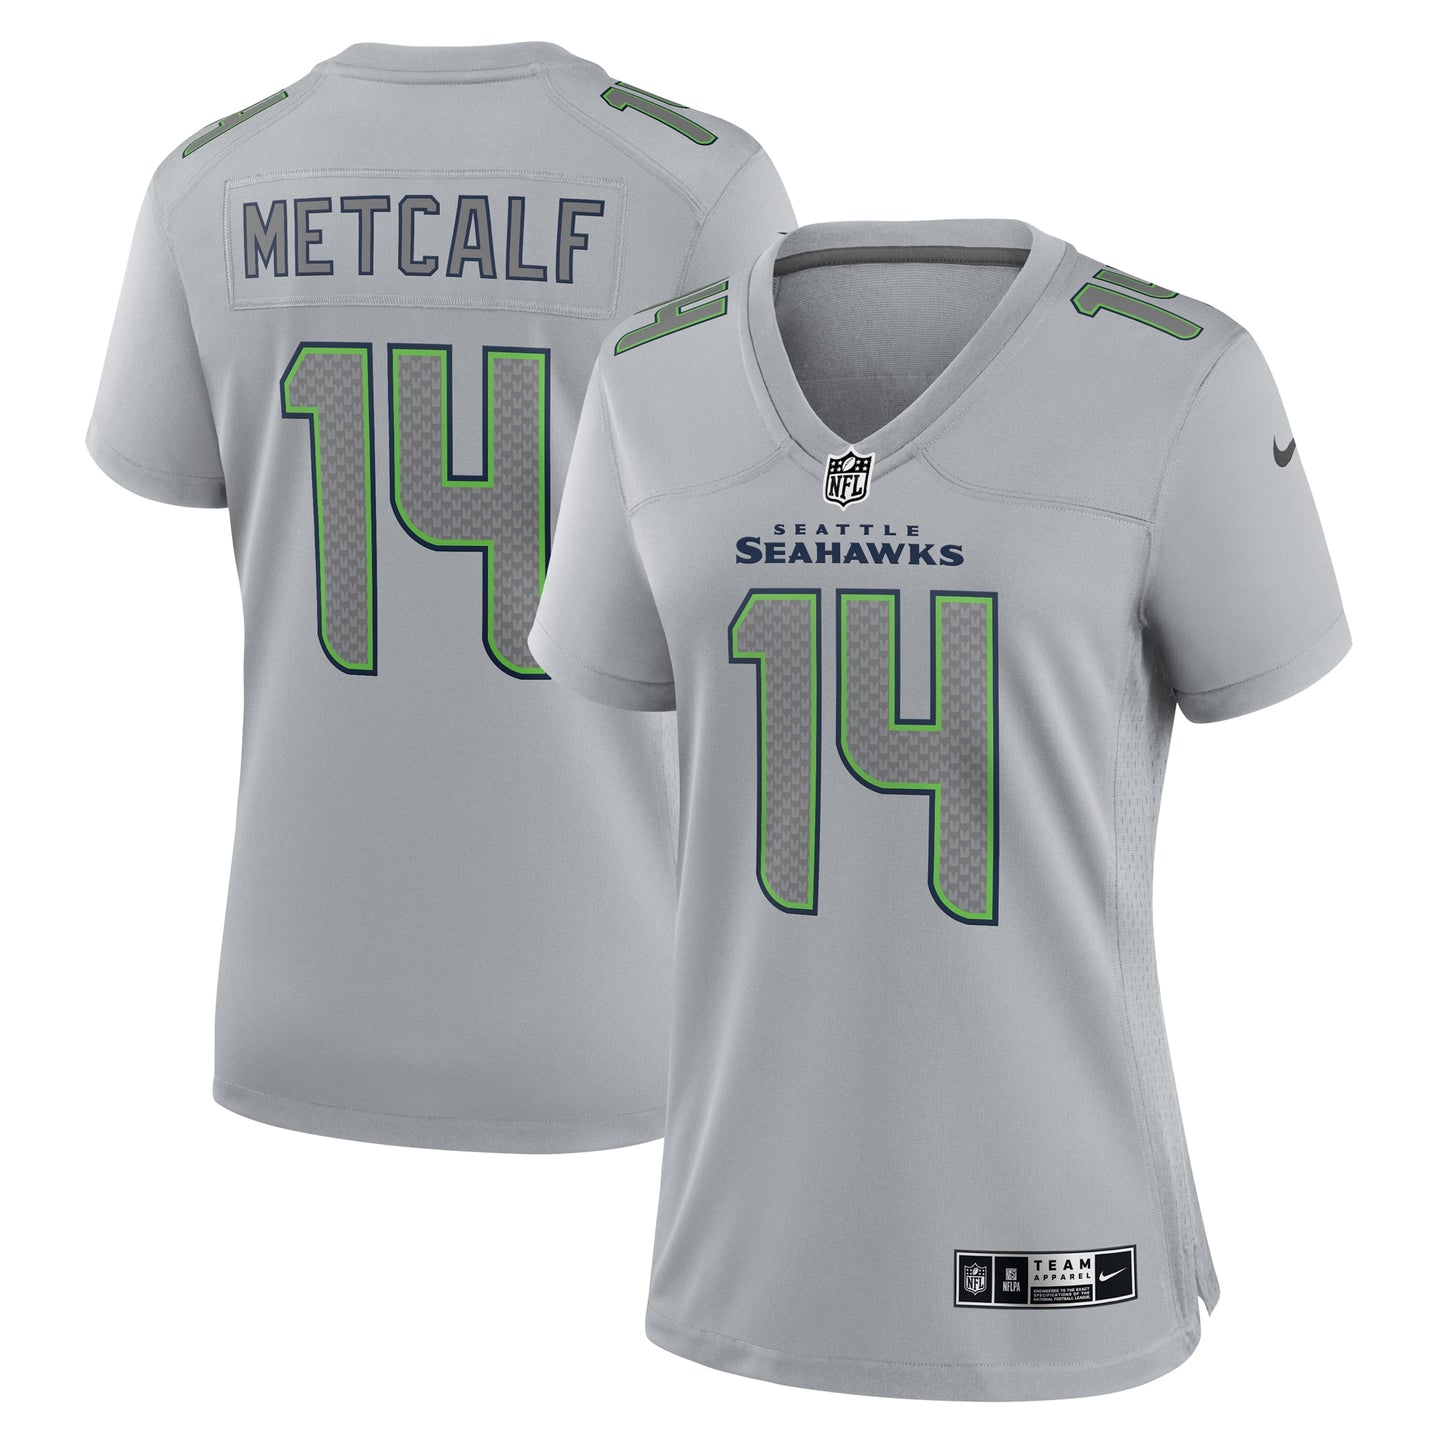 DK Metcalf Seattle Seahawks Nike Women's Atmosphere Fashion Game Jersey - Gray